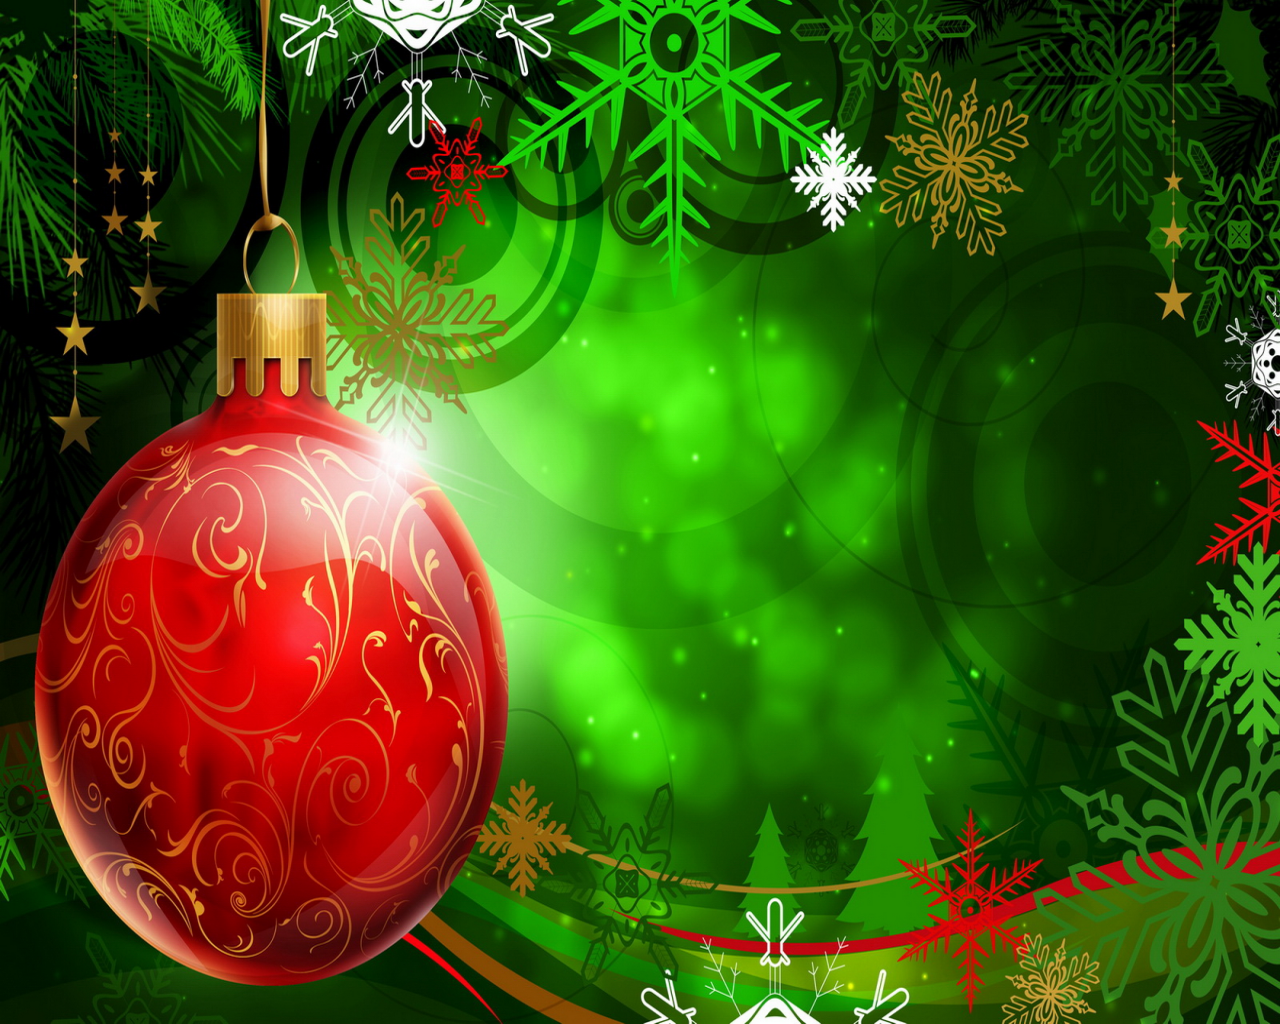 live christmas wallpaper para escritorio,decoración navideña,verde,decoración navideña,navidad,ornamento